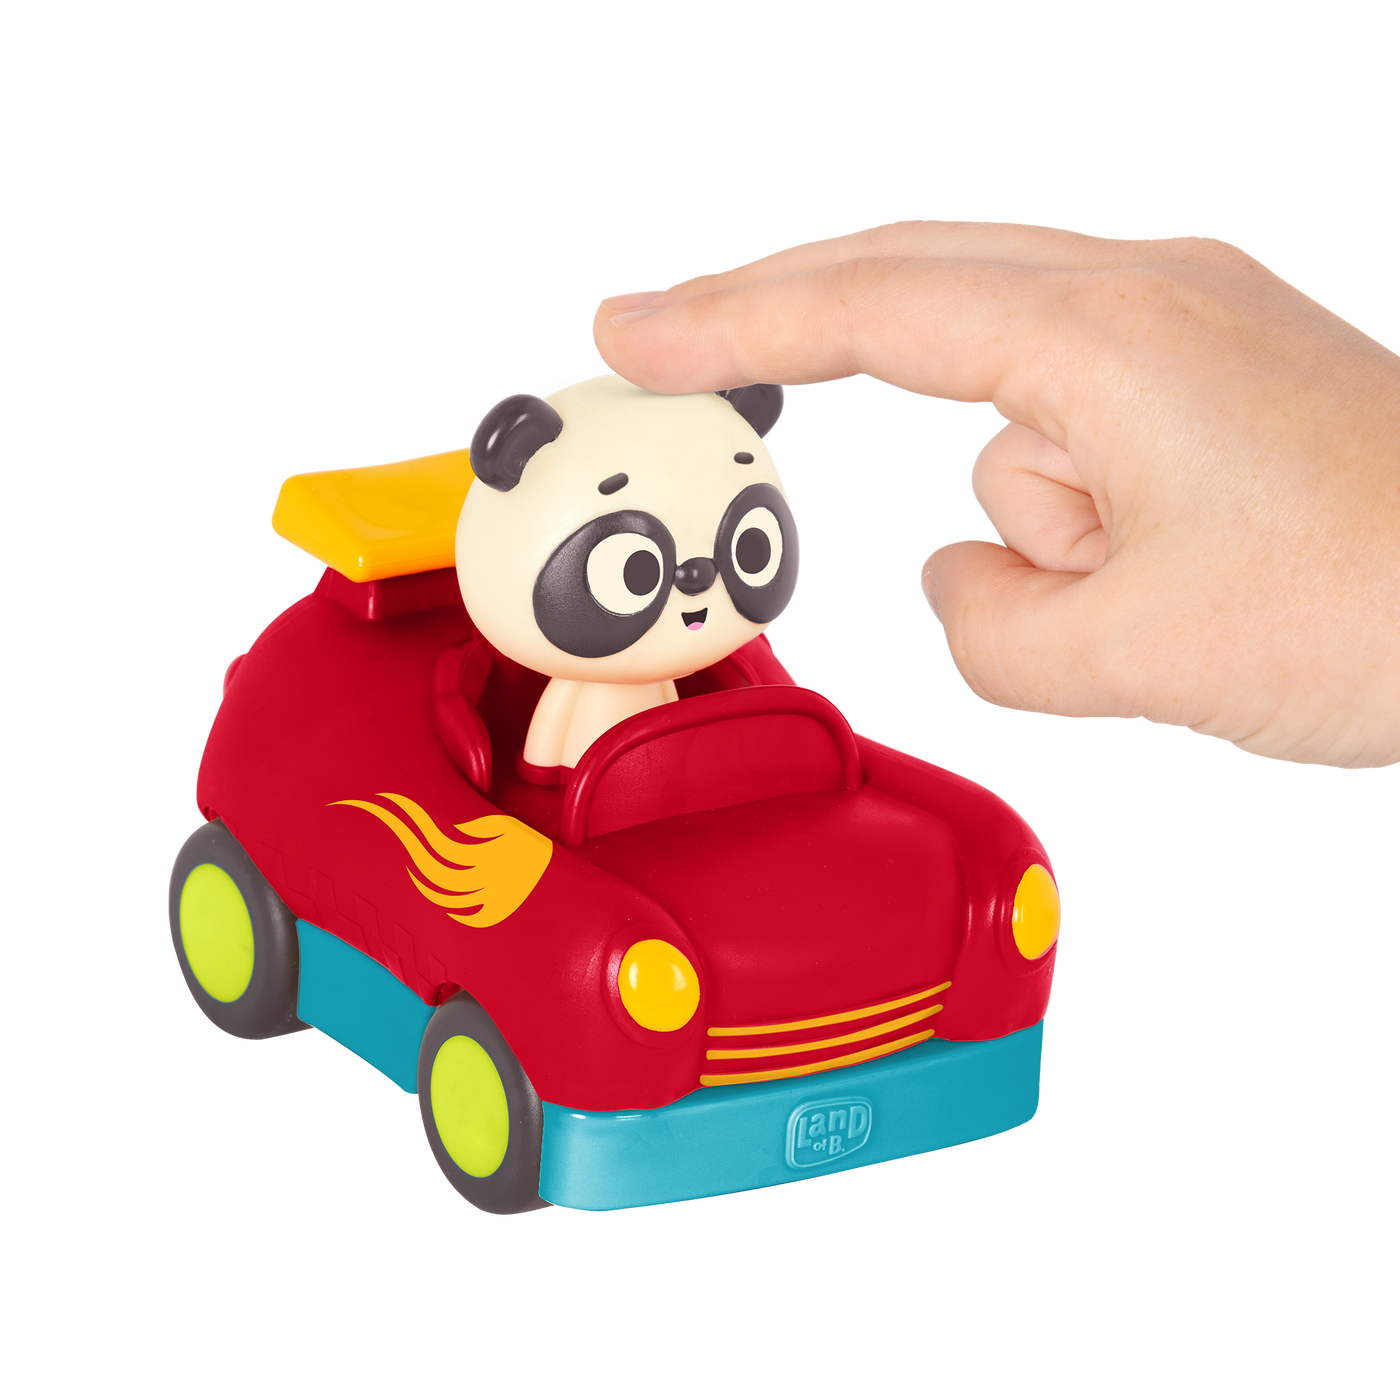 Remote control car with panda driver.